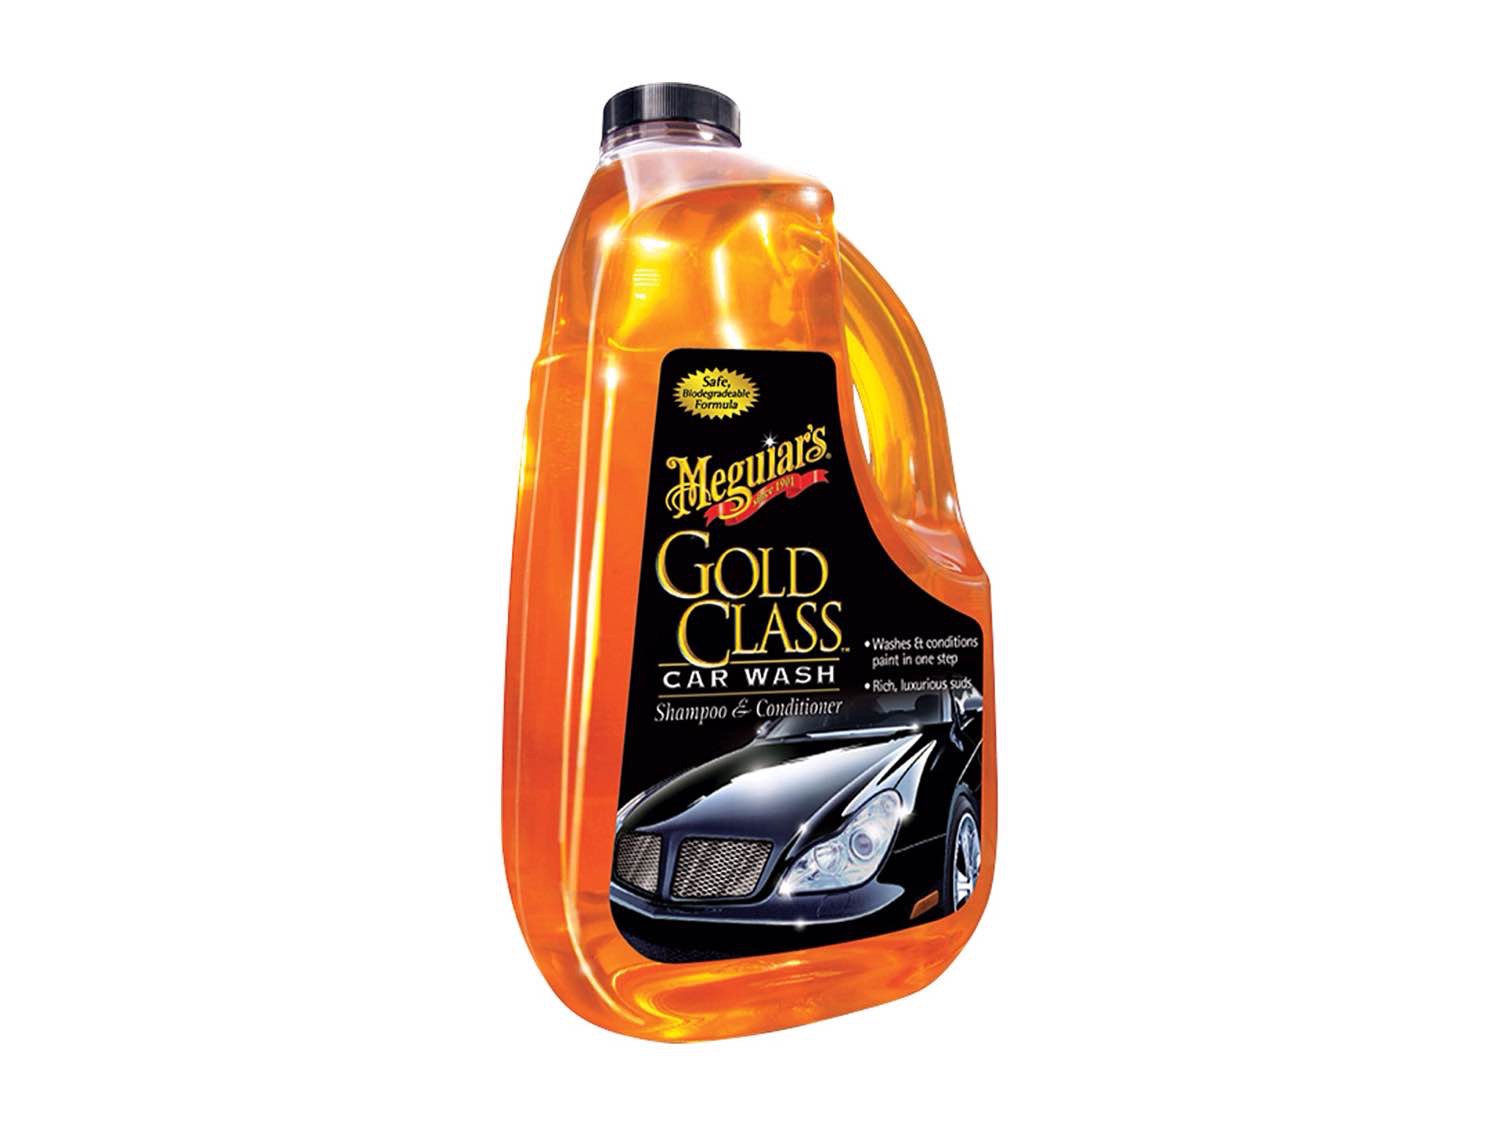 Meguiar's Gold Class car wash shampoo & conditioner. ($9)